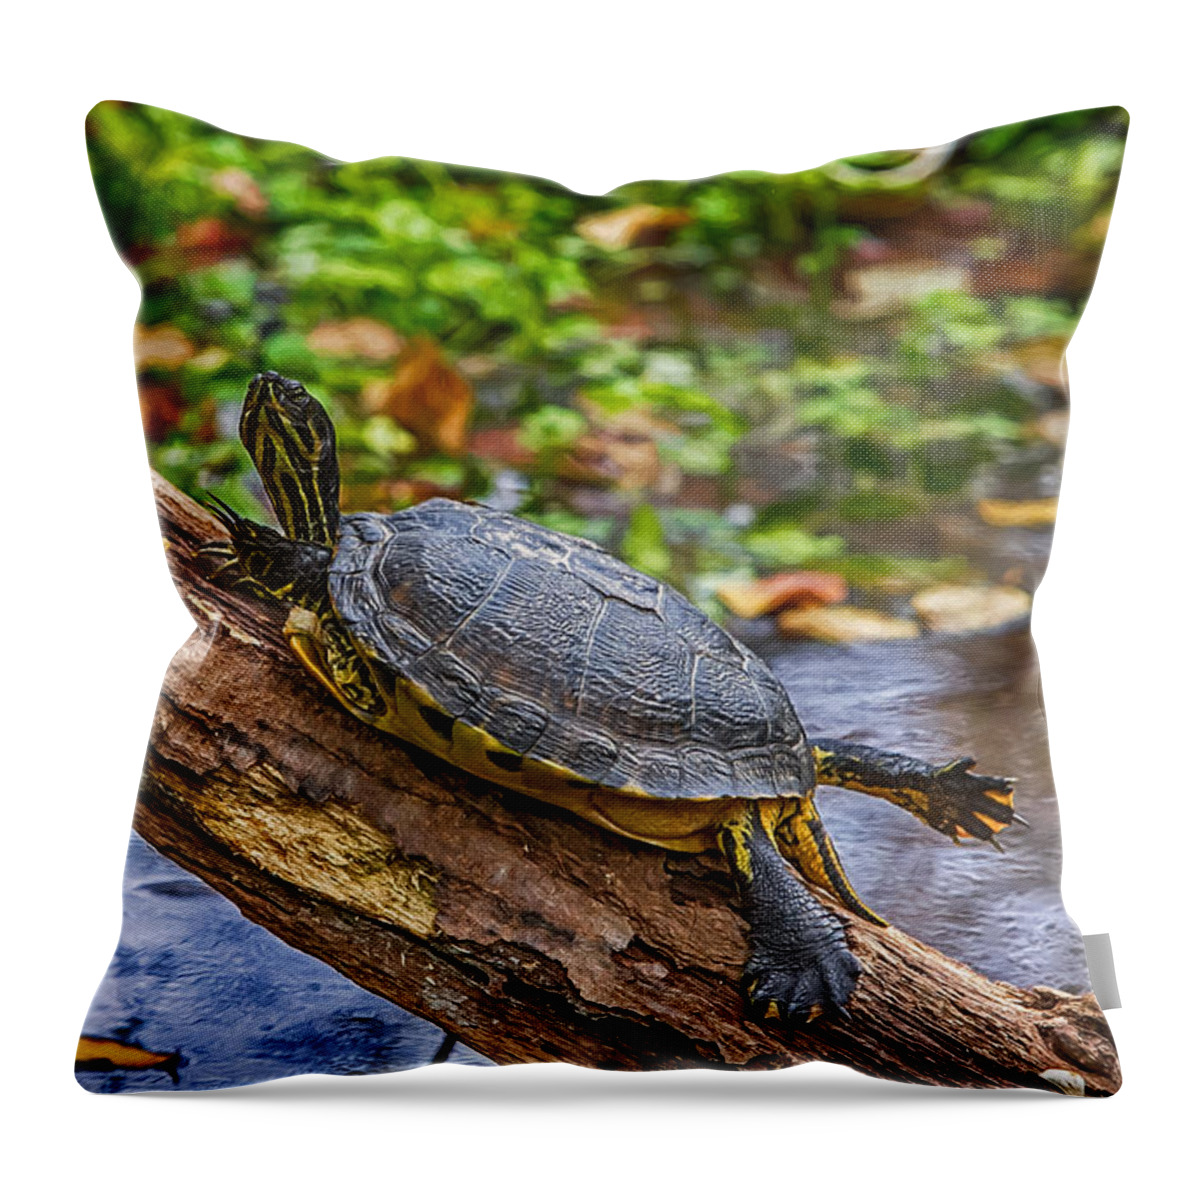 John Haldane Throw Pillow featuring the digital art Turtle Yoga by John Haldane